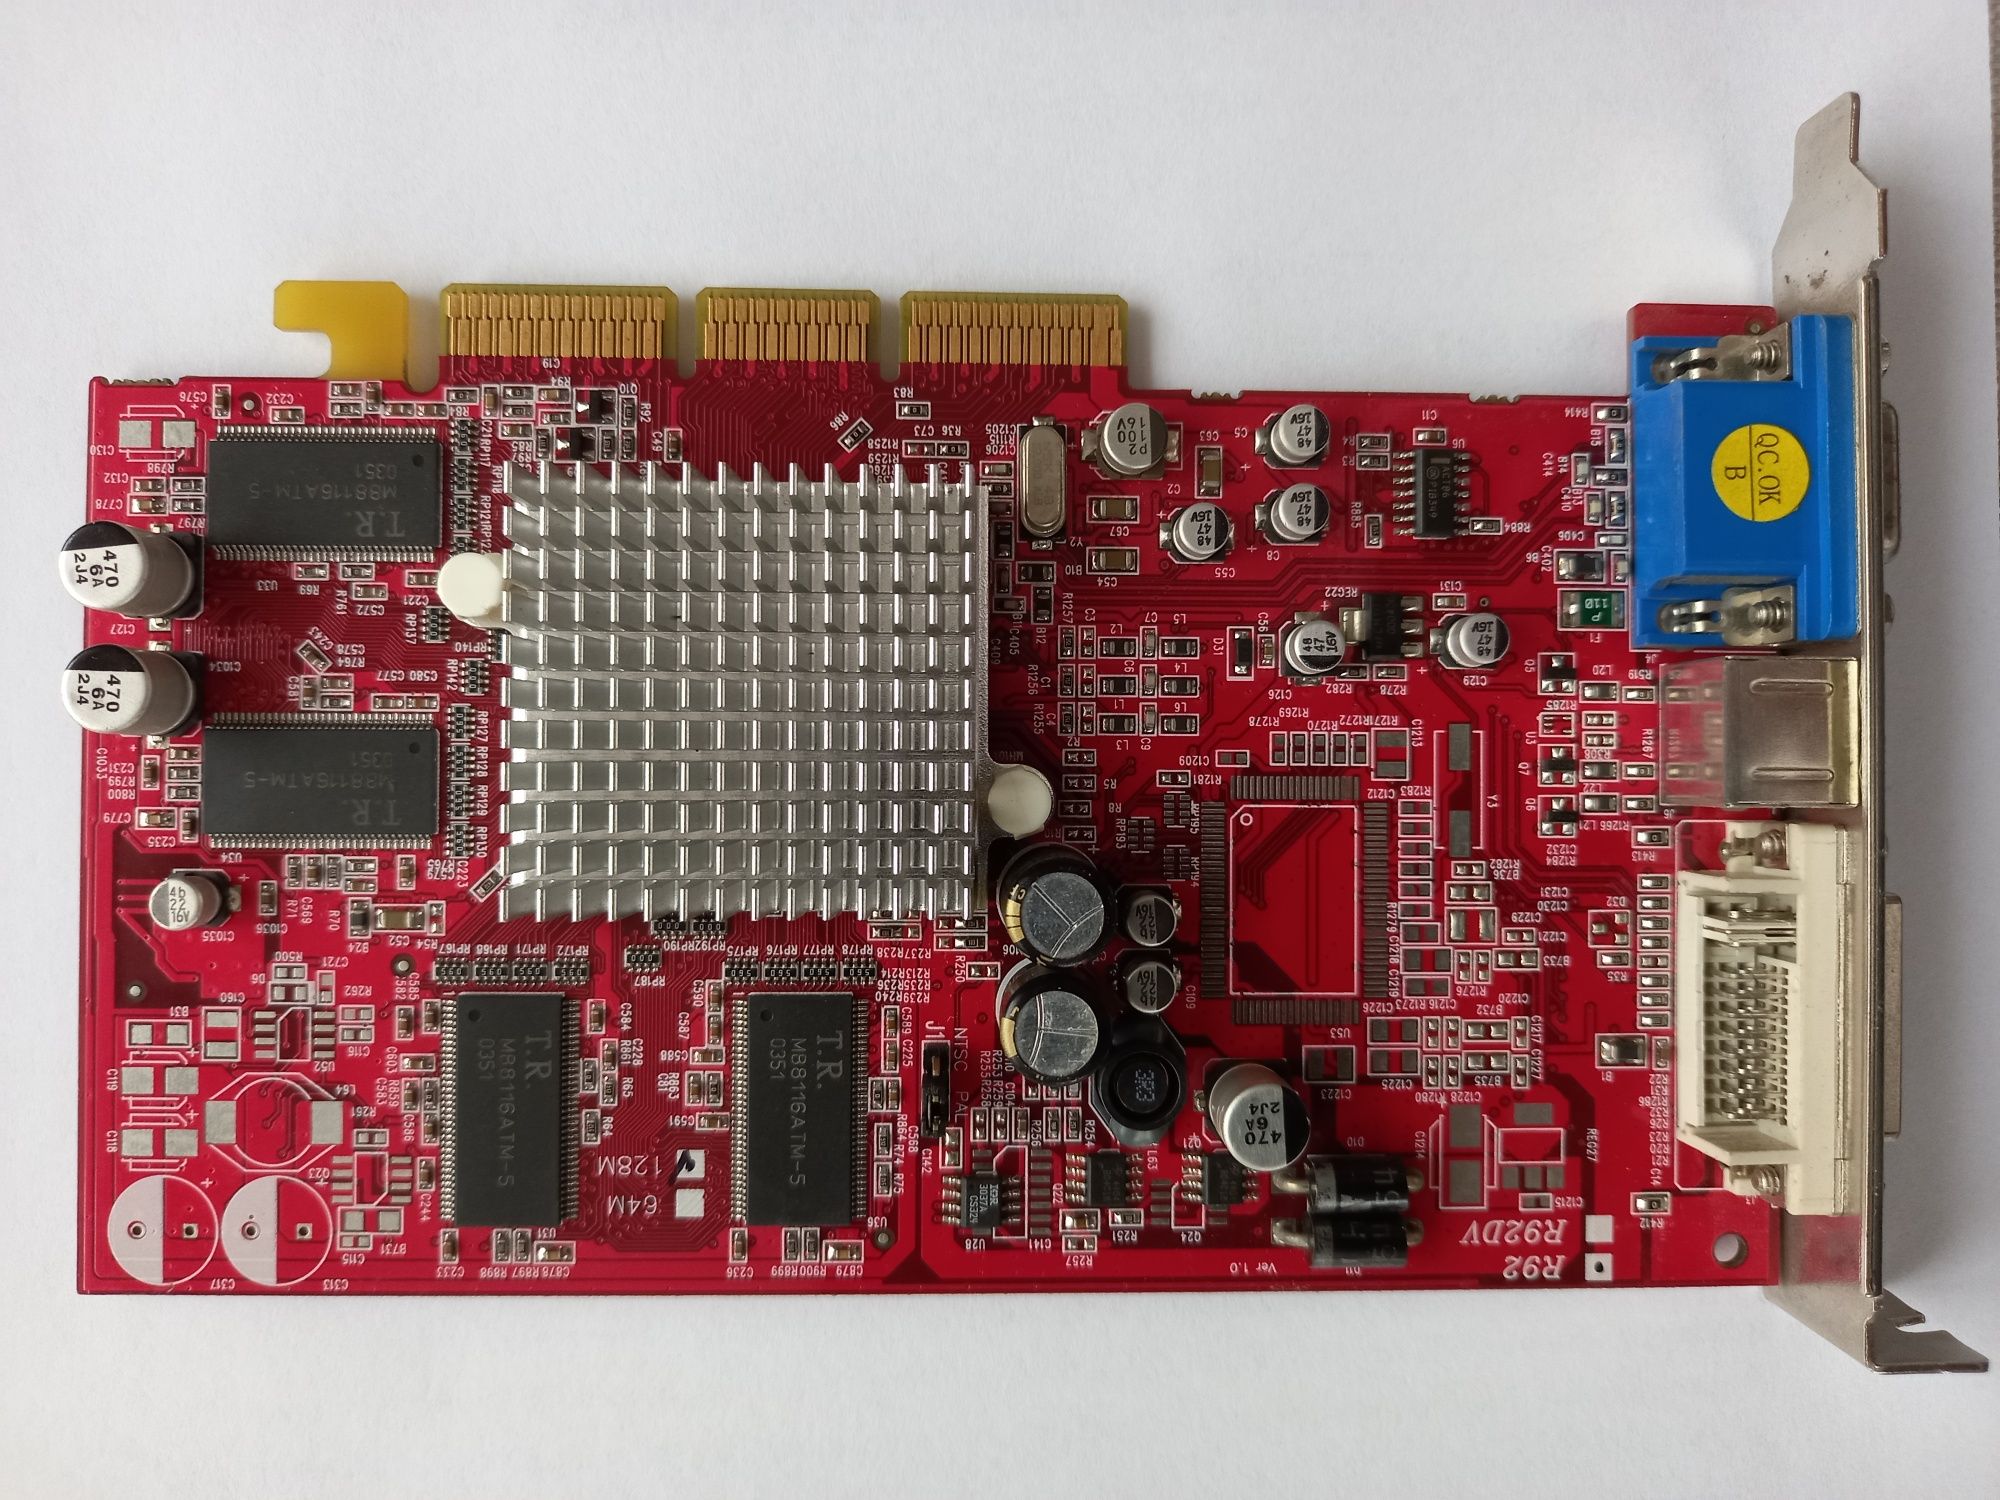 Retro karta graficzna Radeon 9200 R92-C3L 128MB DDR AGP